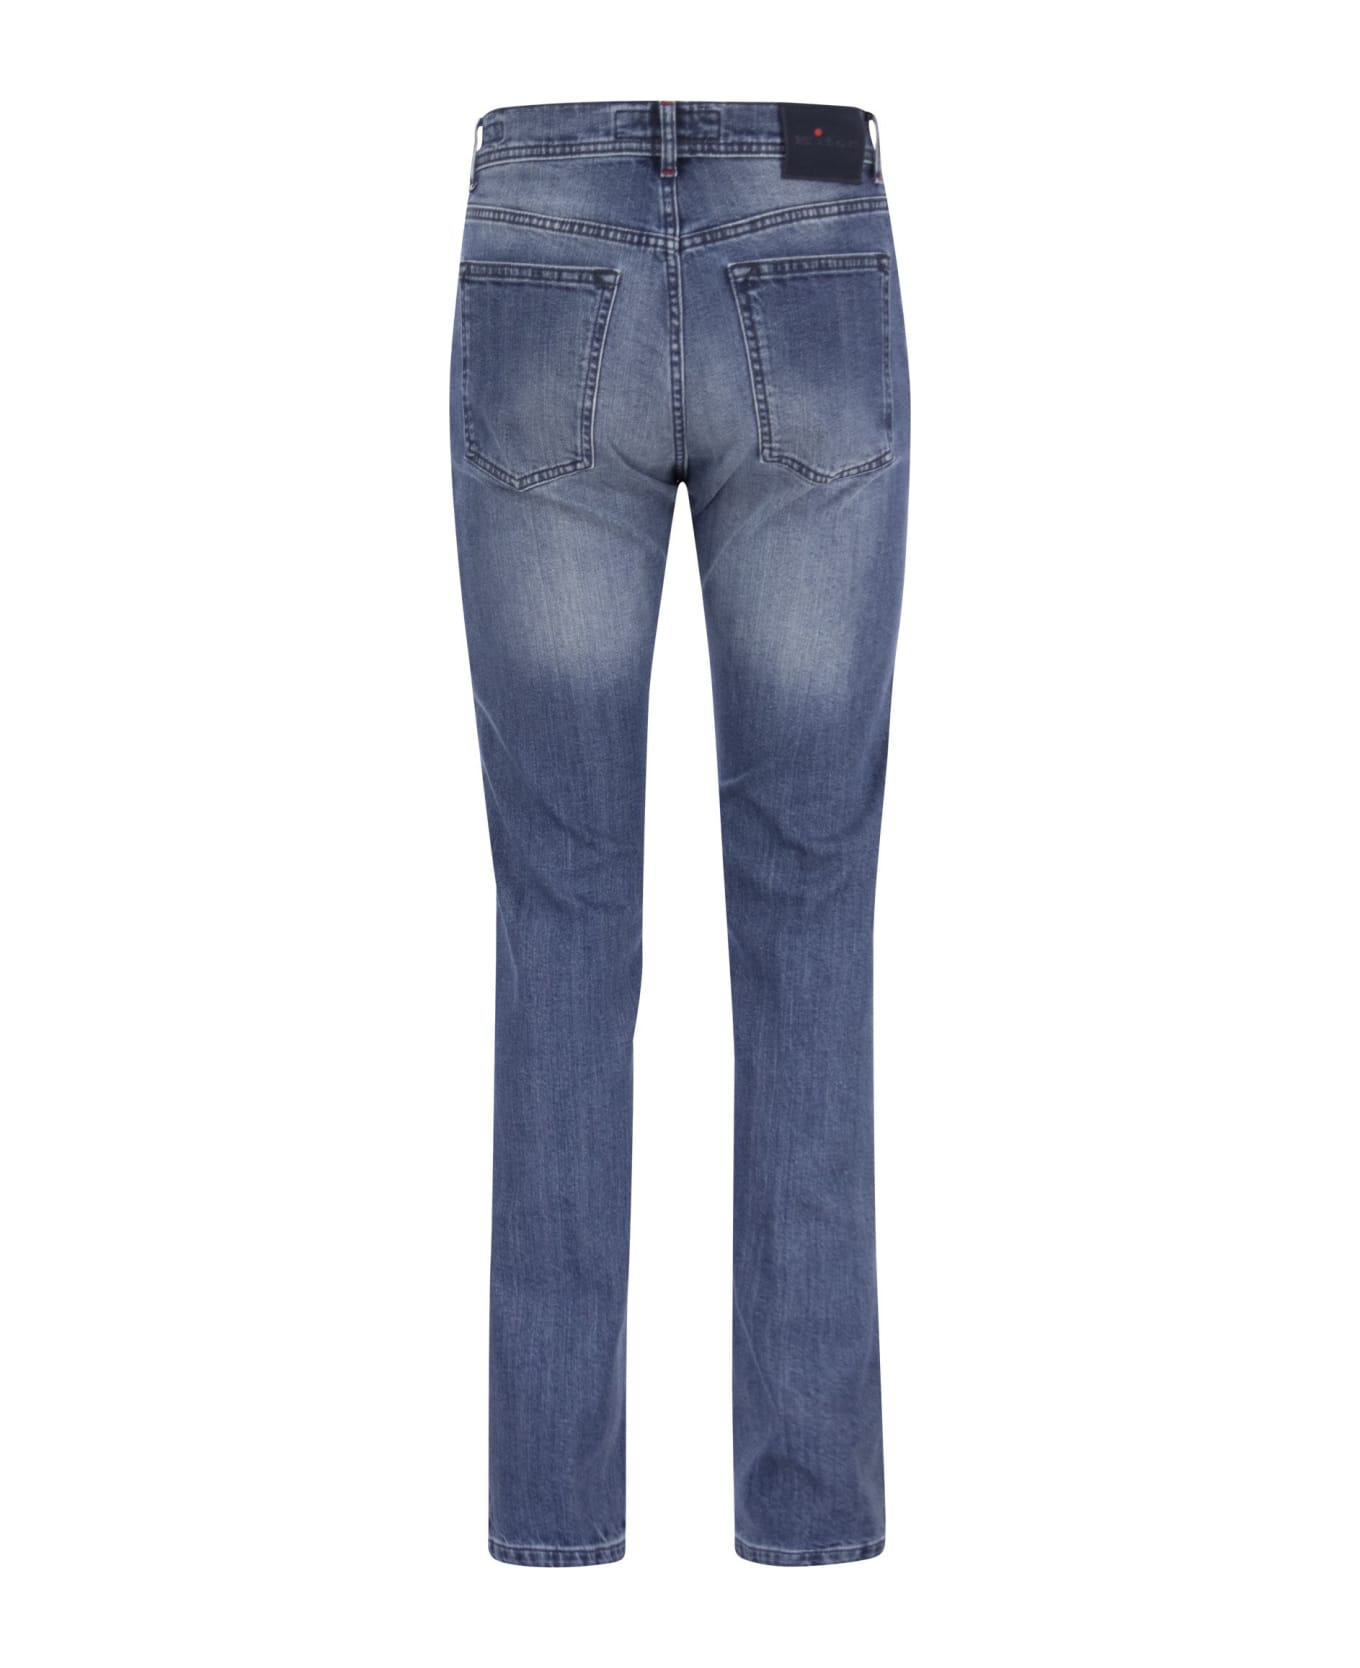 Kiton 5-pocket Cotton Jeans - Medium Denim